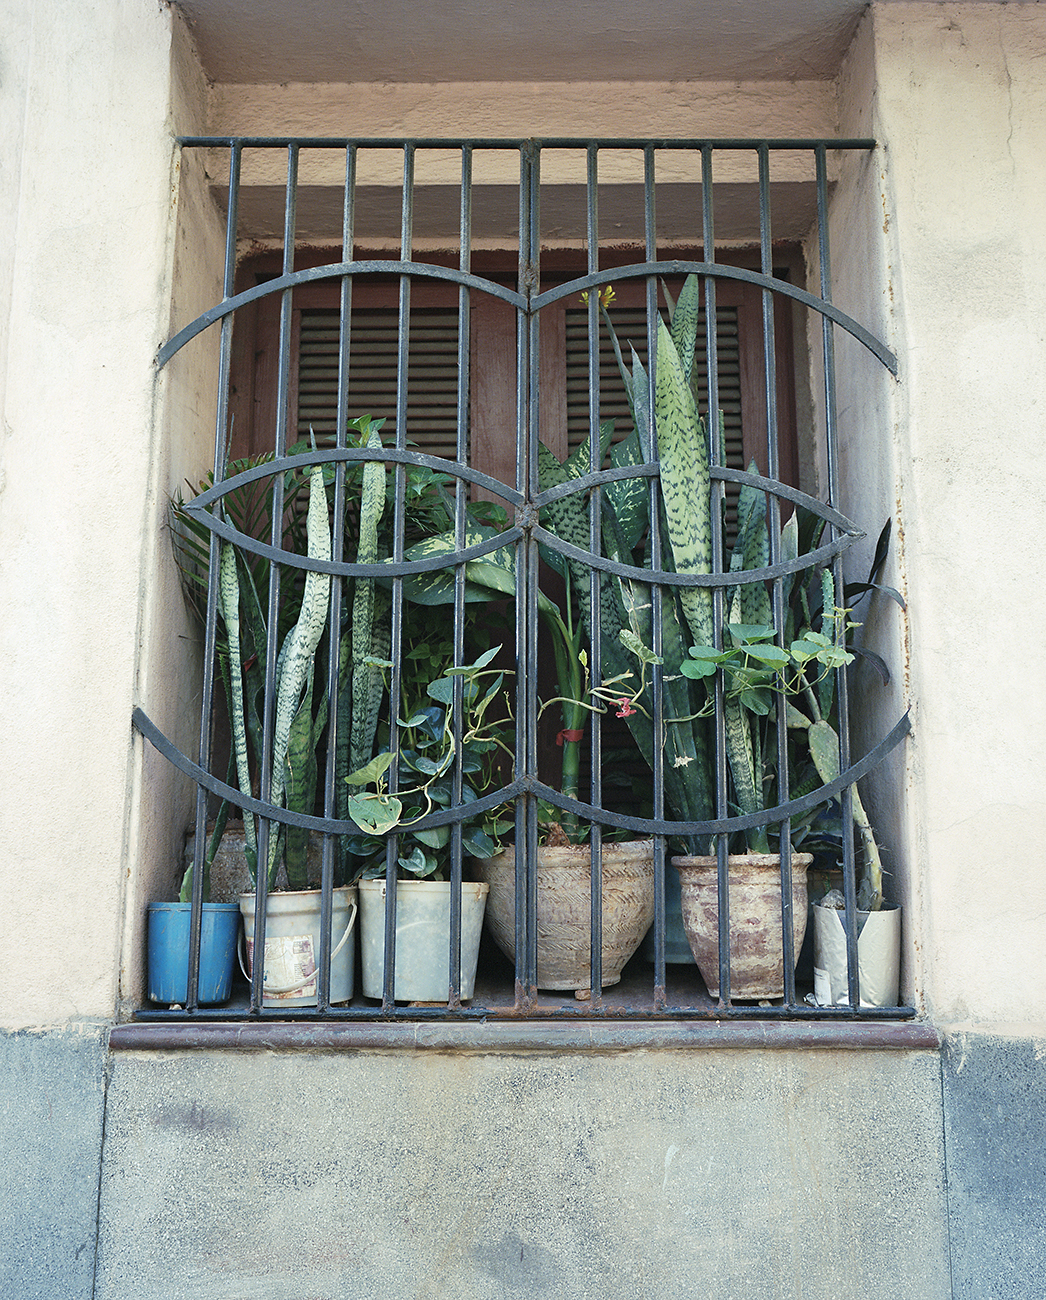 Plants on the window sill, La Habana Cuba, 2018